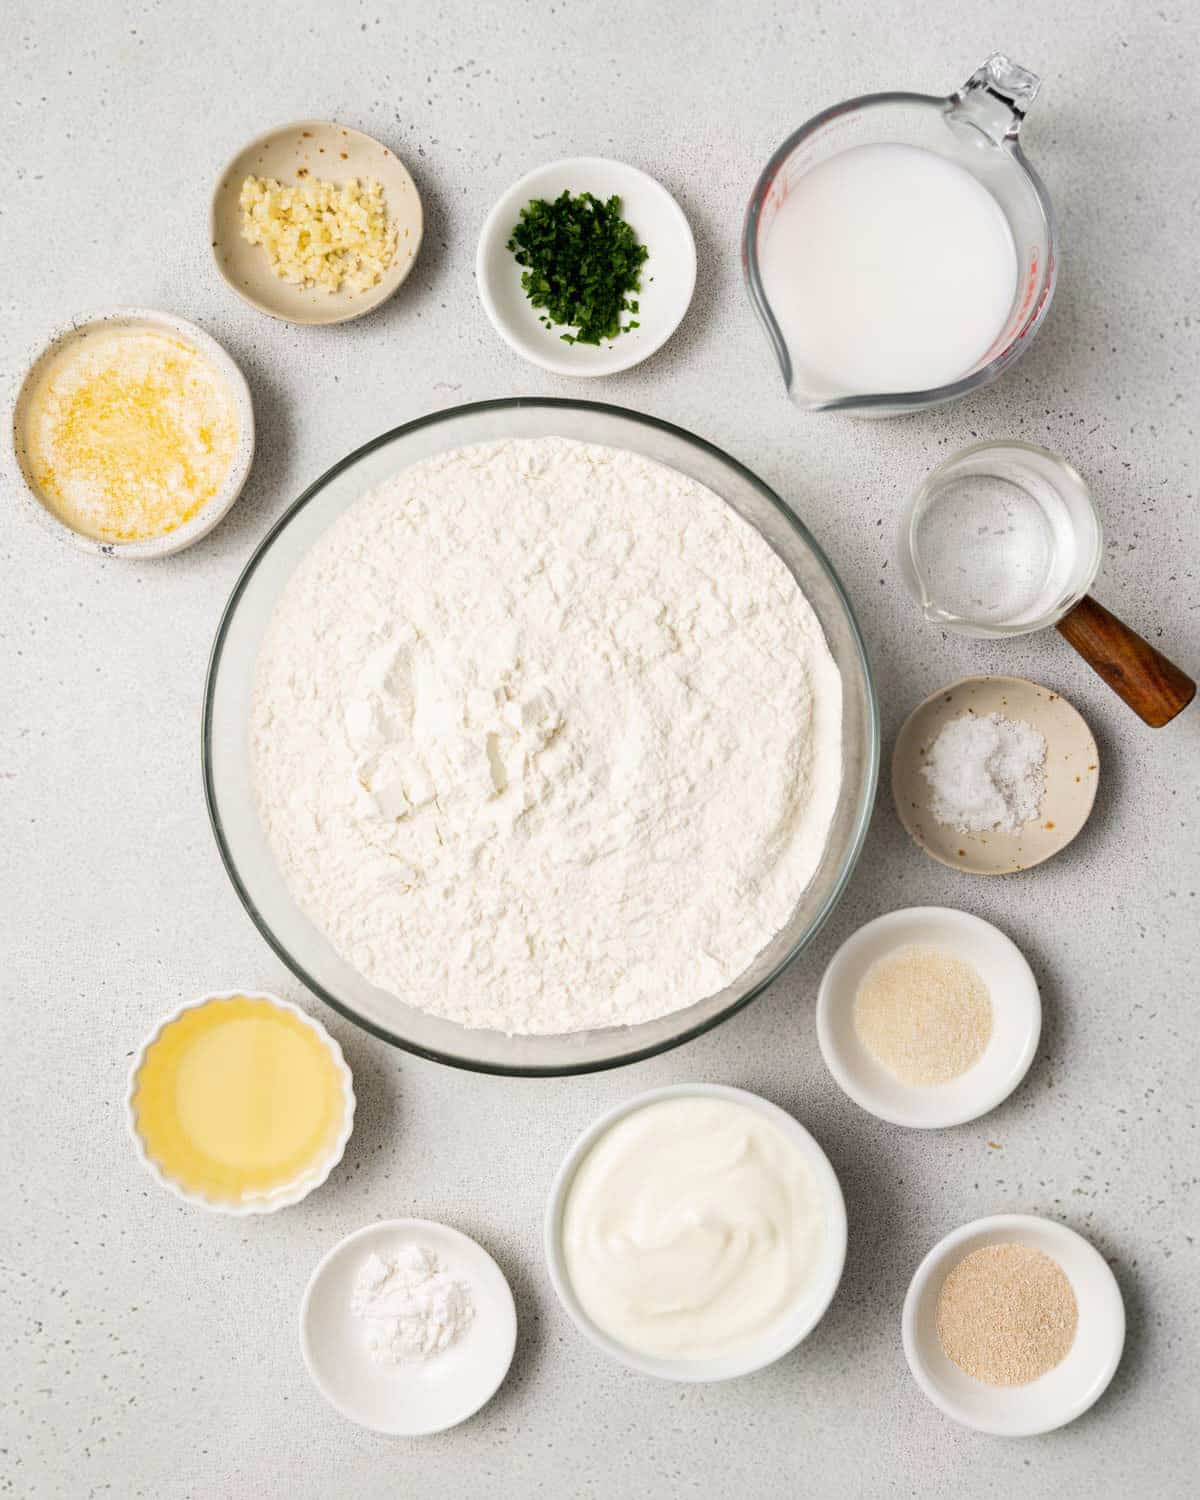 Flour, yogurt, yeast, herbs, water, milk, baking powder, sugar and salt divided into small bowls.